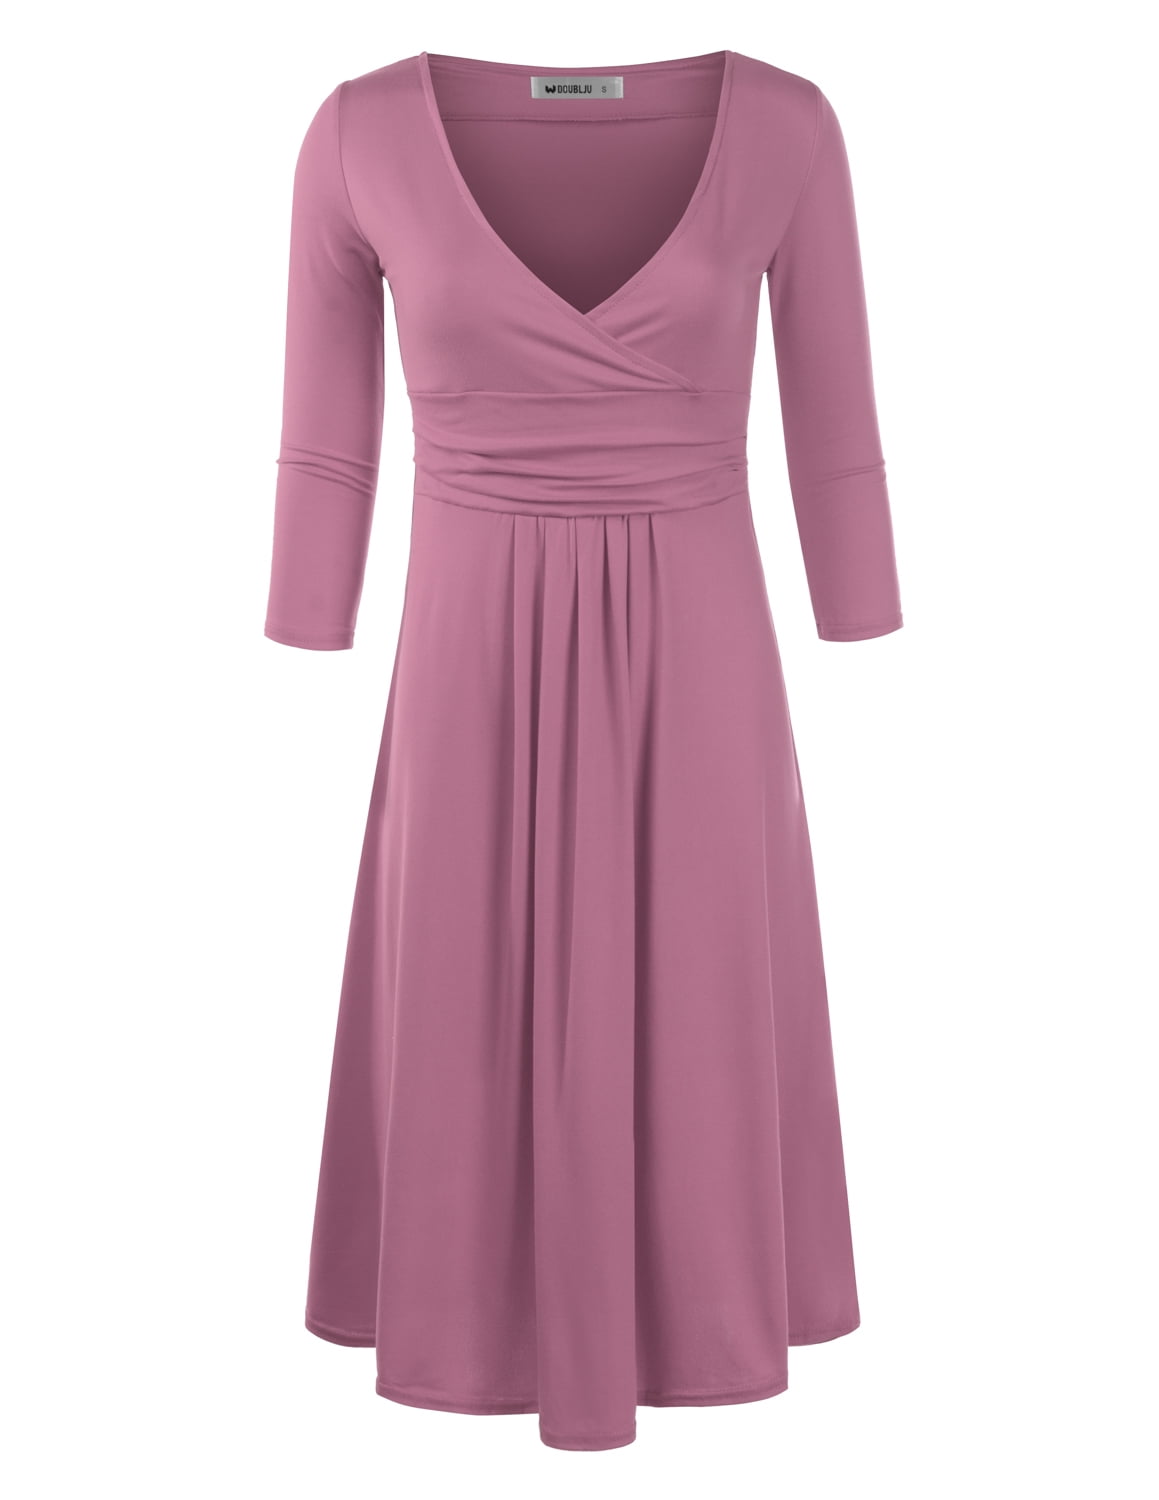 Doublju Women's Long Sleeve Casual Plain Simple T-Shirt Loose Dress MAUVE  2XL Plus Size - Walmart.com